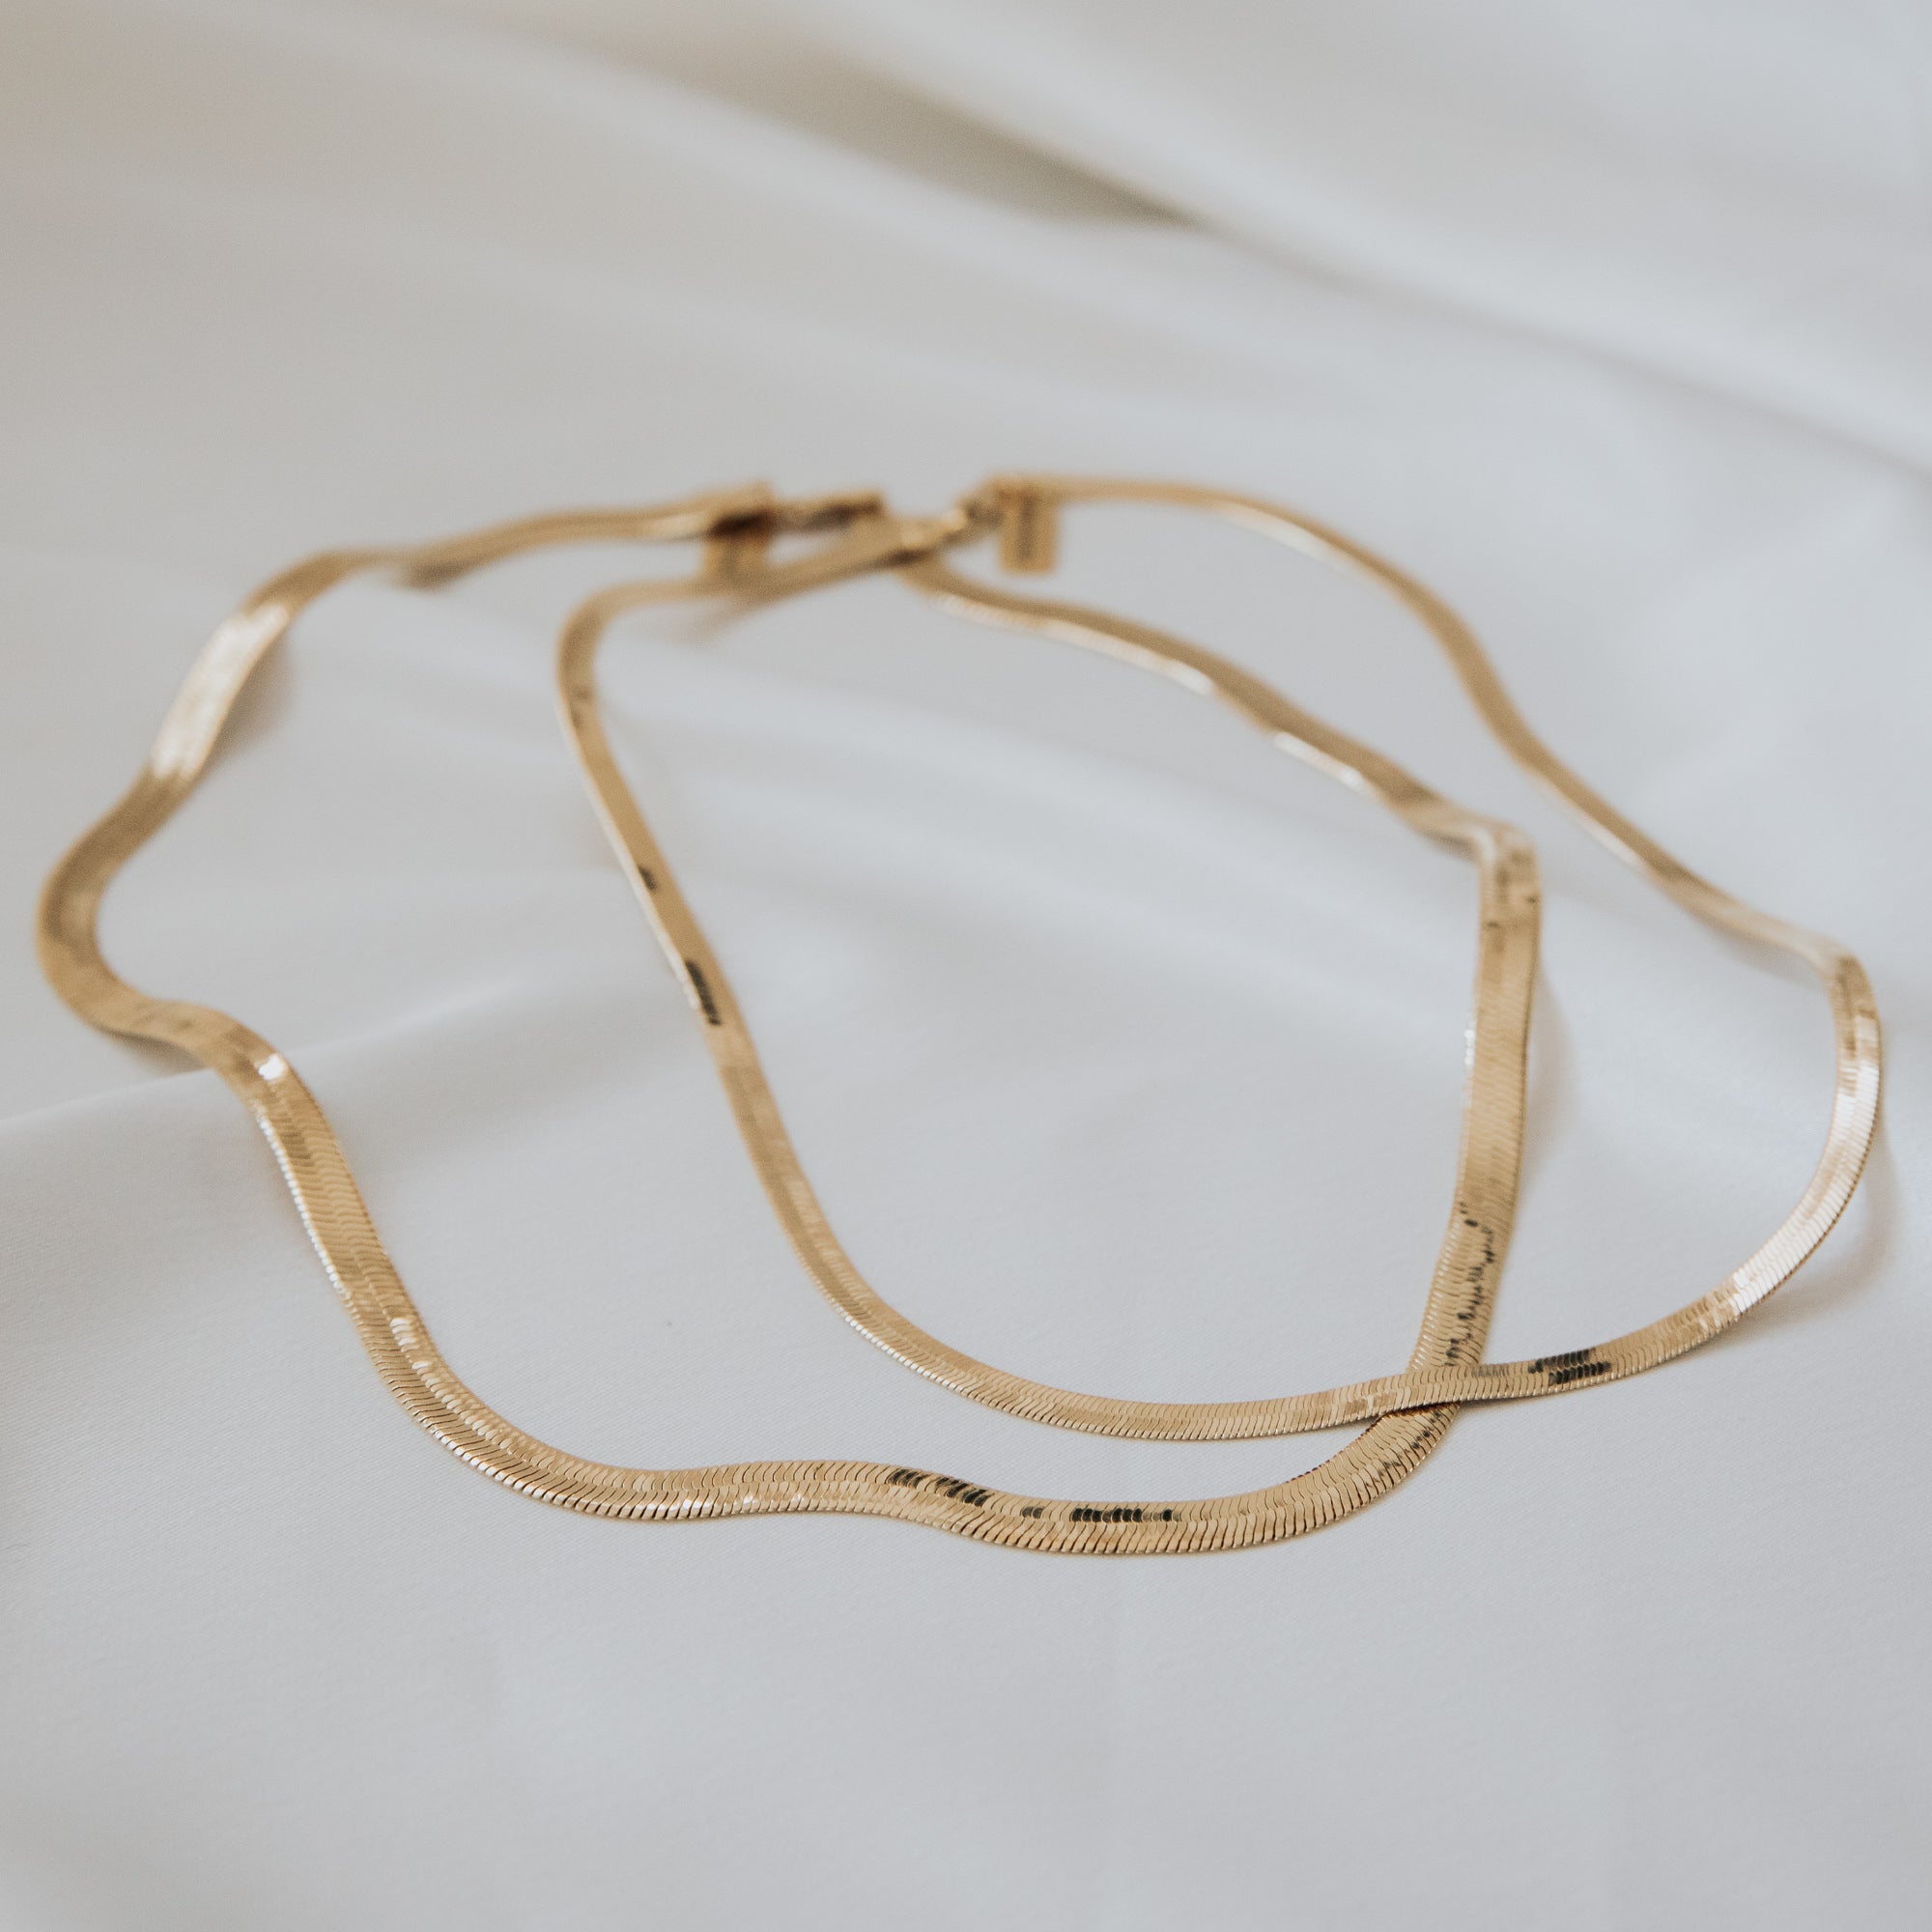 Essential Herringbone - Large from Erin Fader Jewelry